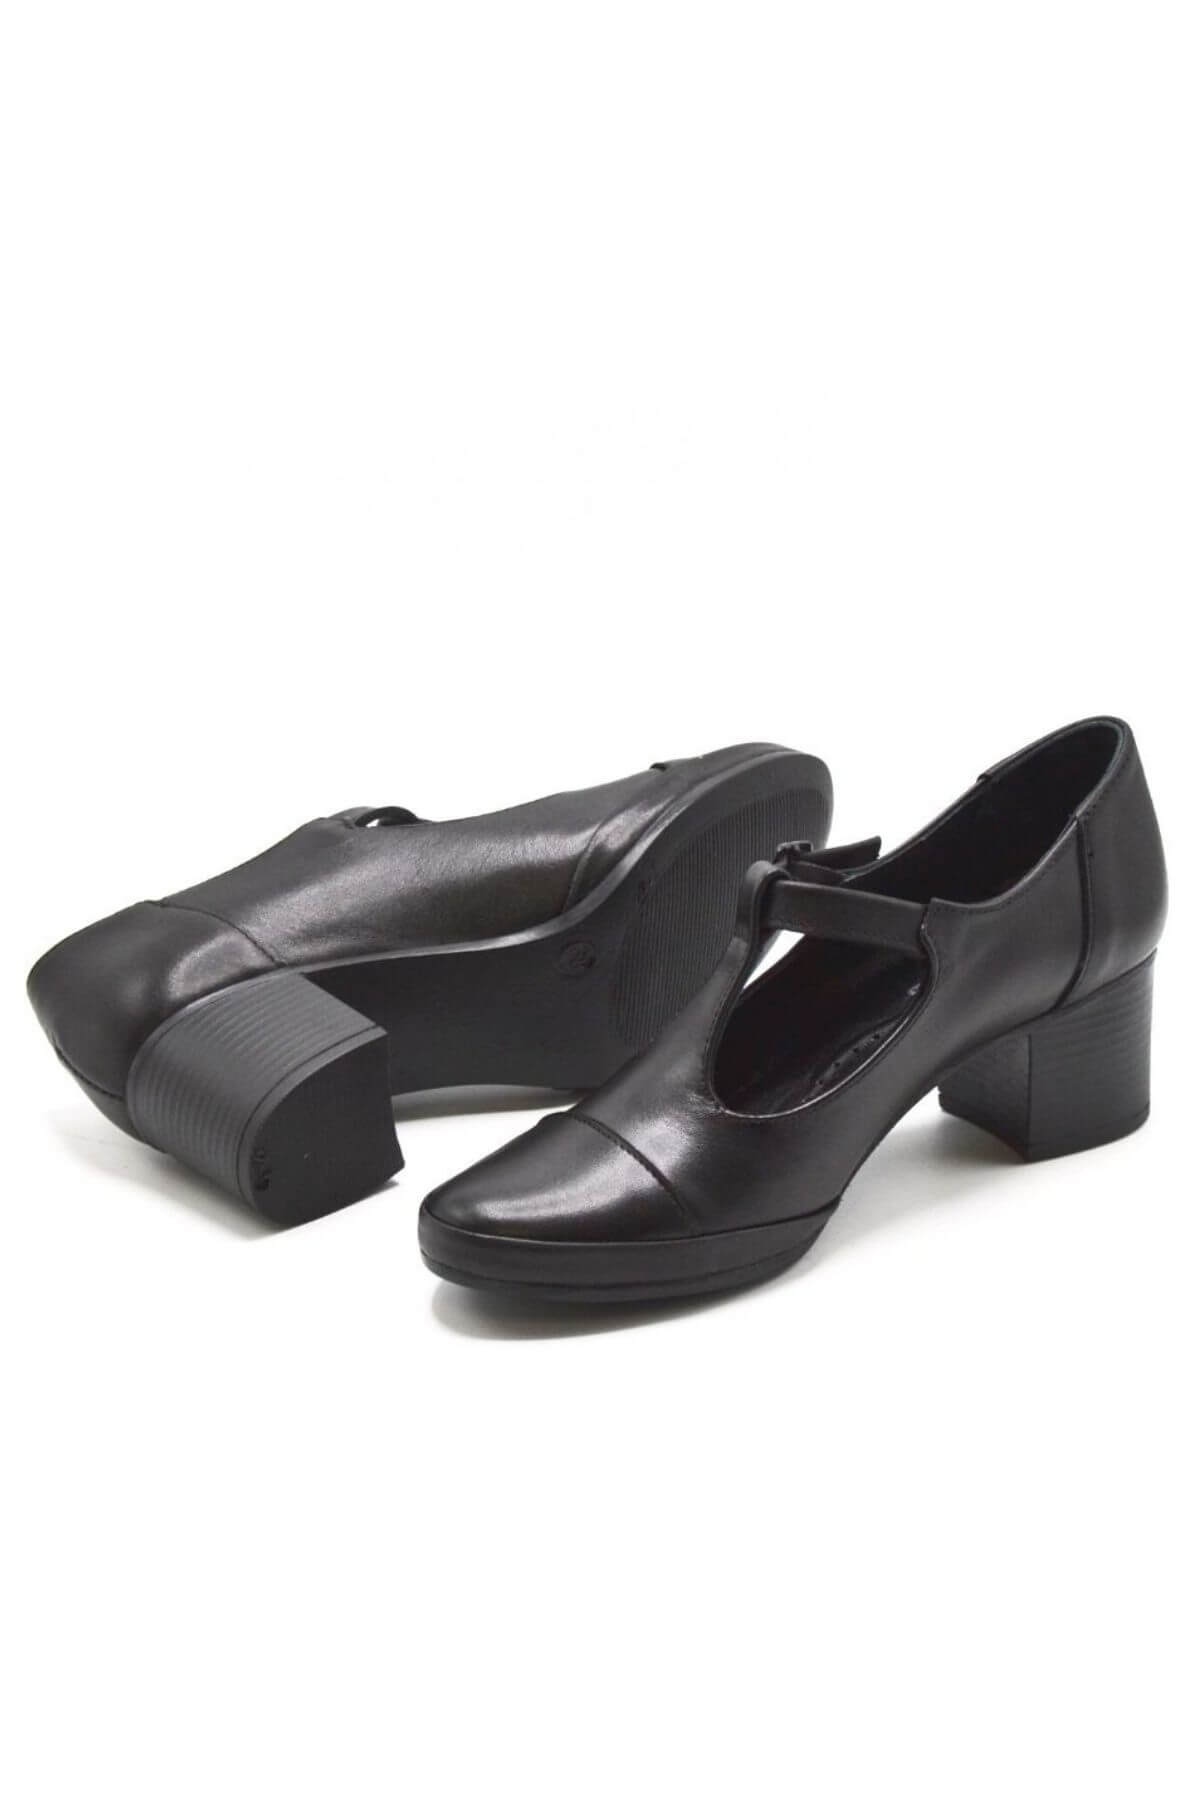 Kadın Topuklu Deri Ayakkabı Siyah 1911954K - Thumbnail